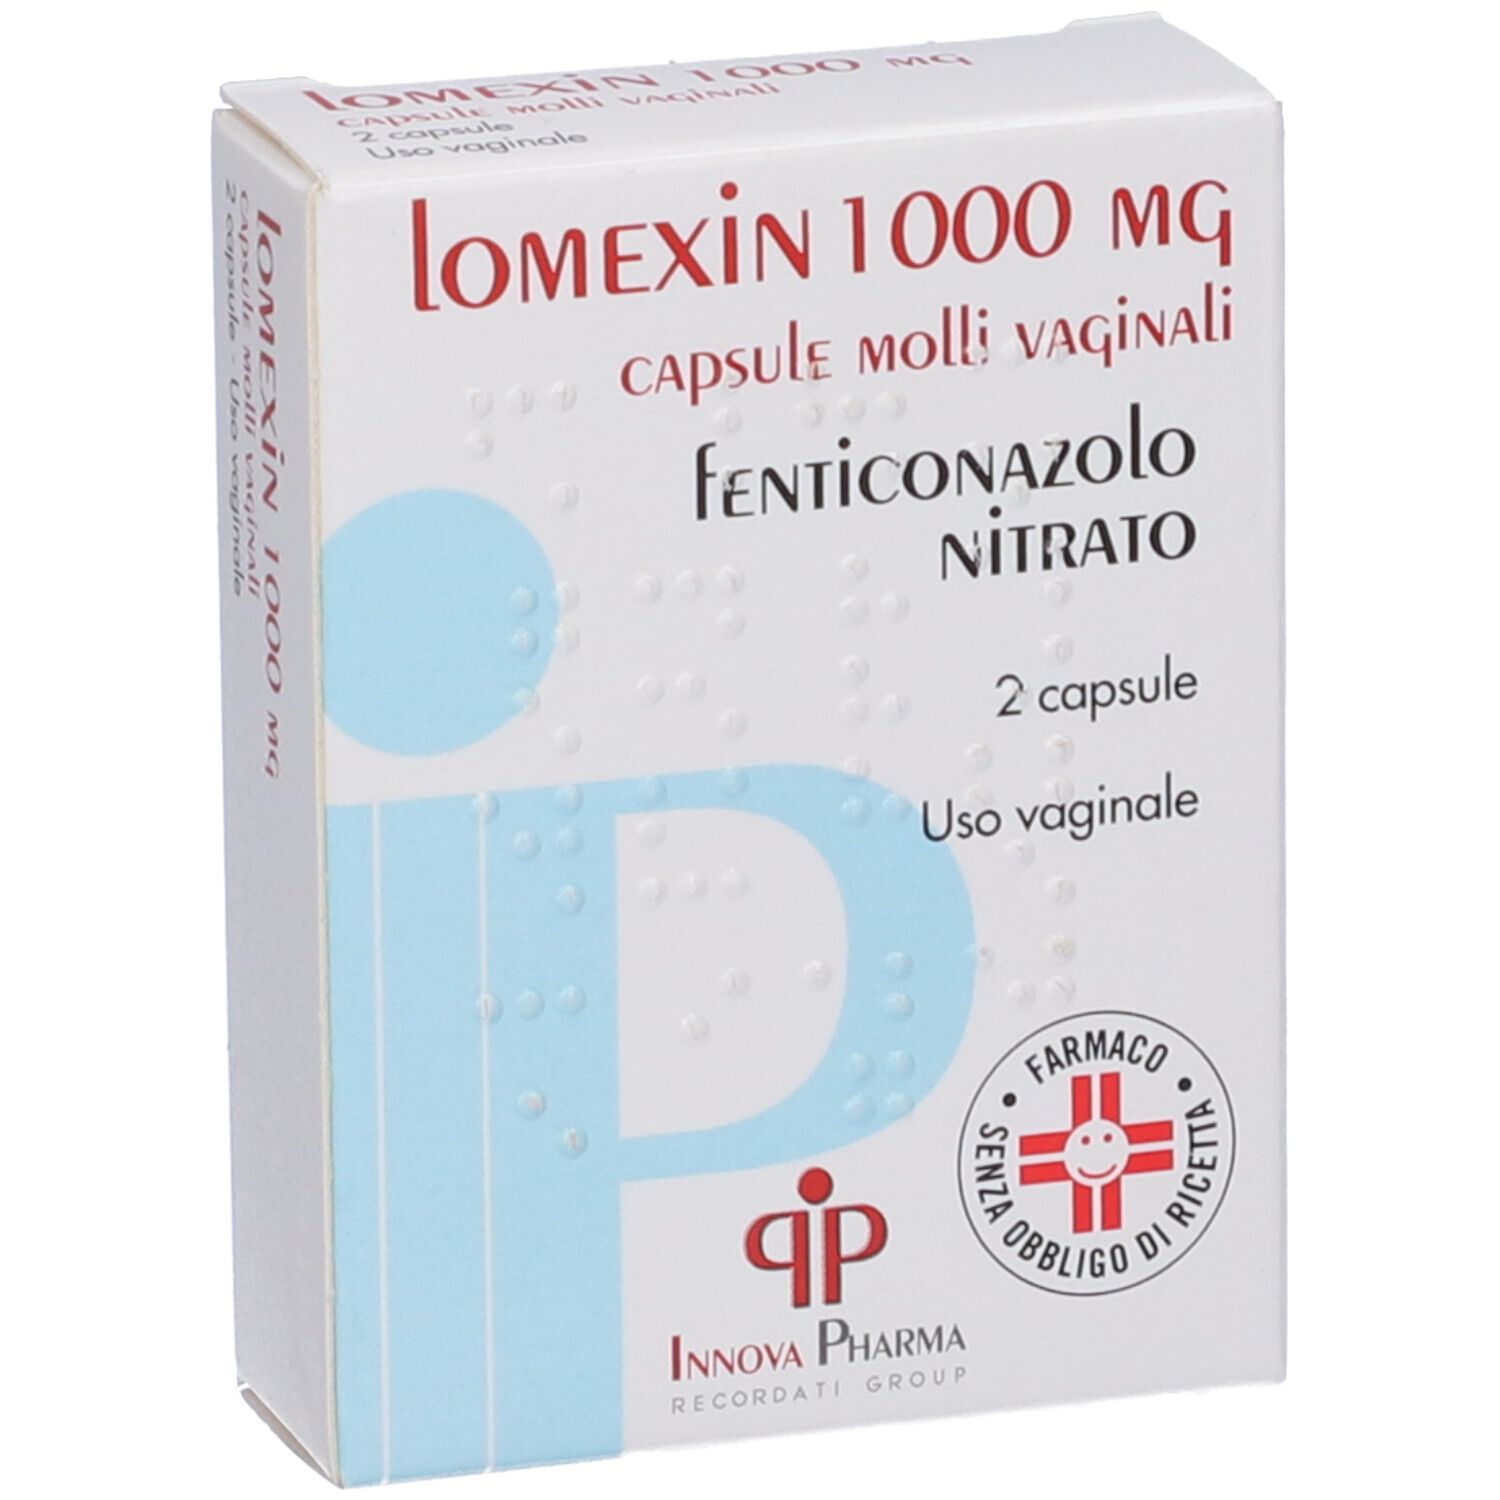 Lomexin 1000 mg capsule molli vaginali